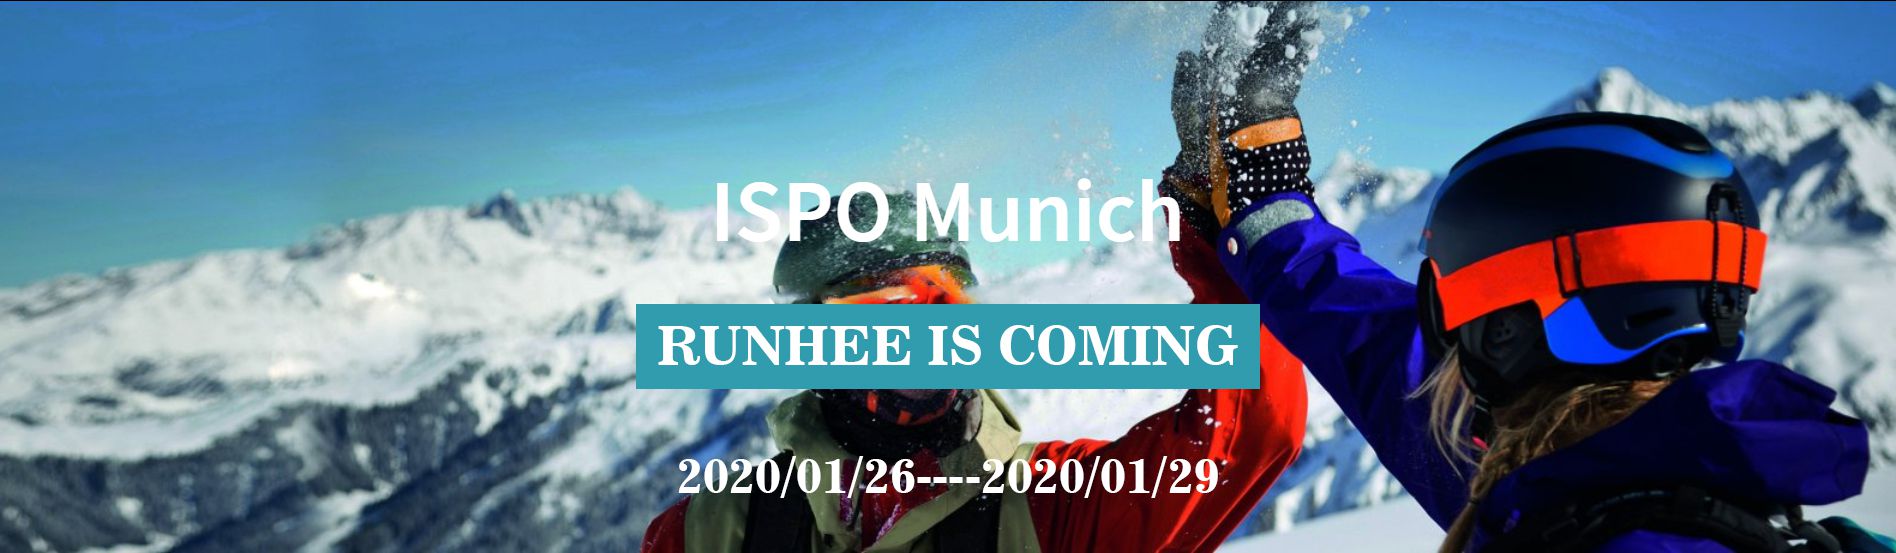 Runhee attending the Munich ISPO Exhibition in Munich in January 2020